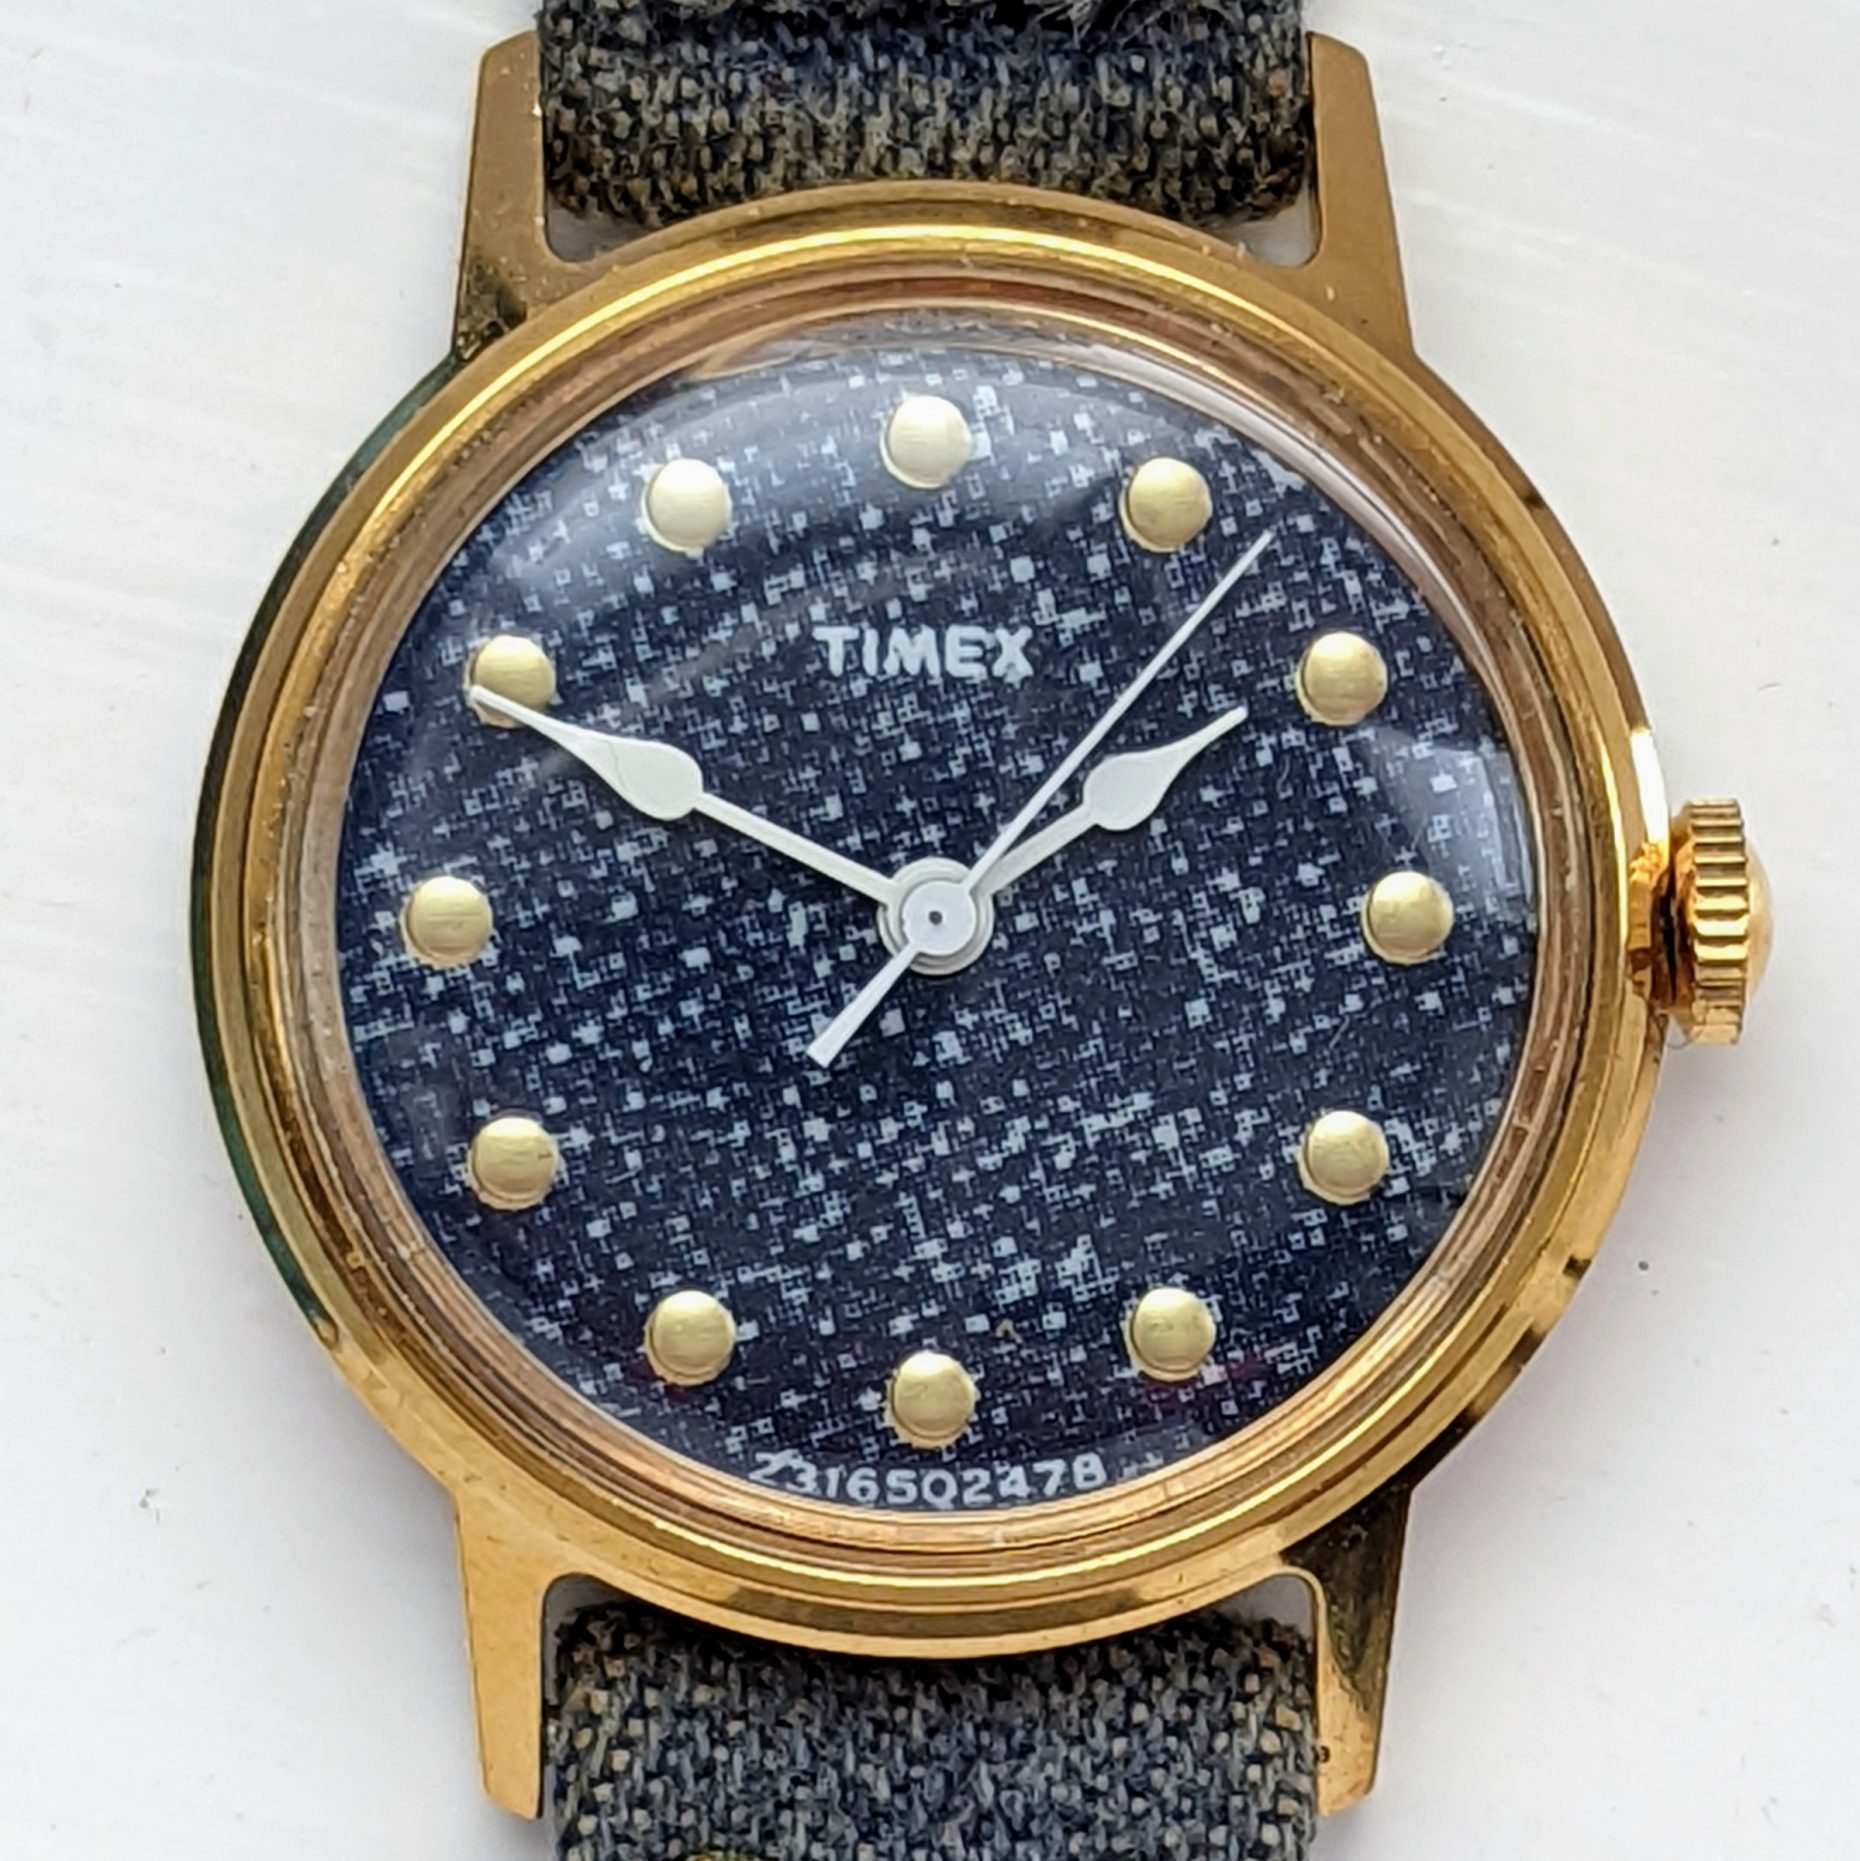 Timex Wrist Jeans 23165 02478 1978 Sprite